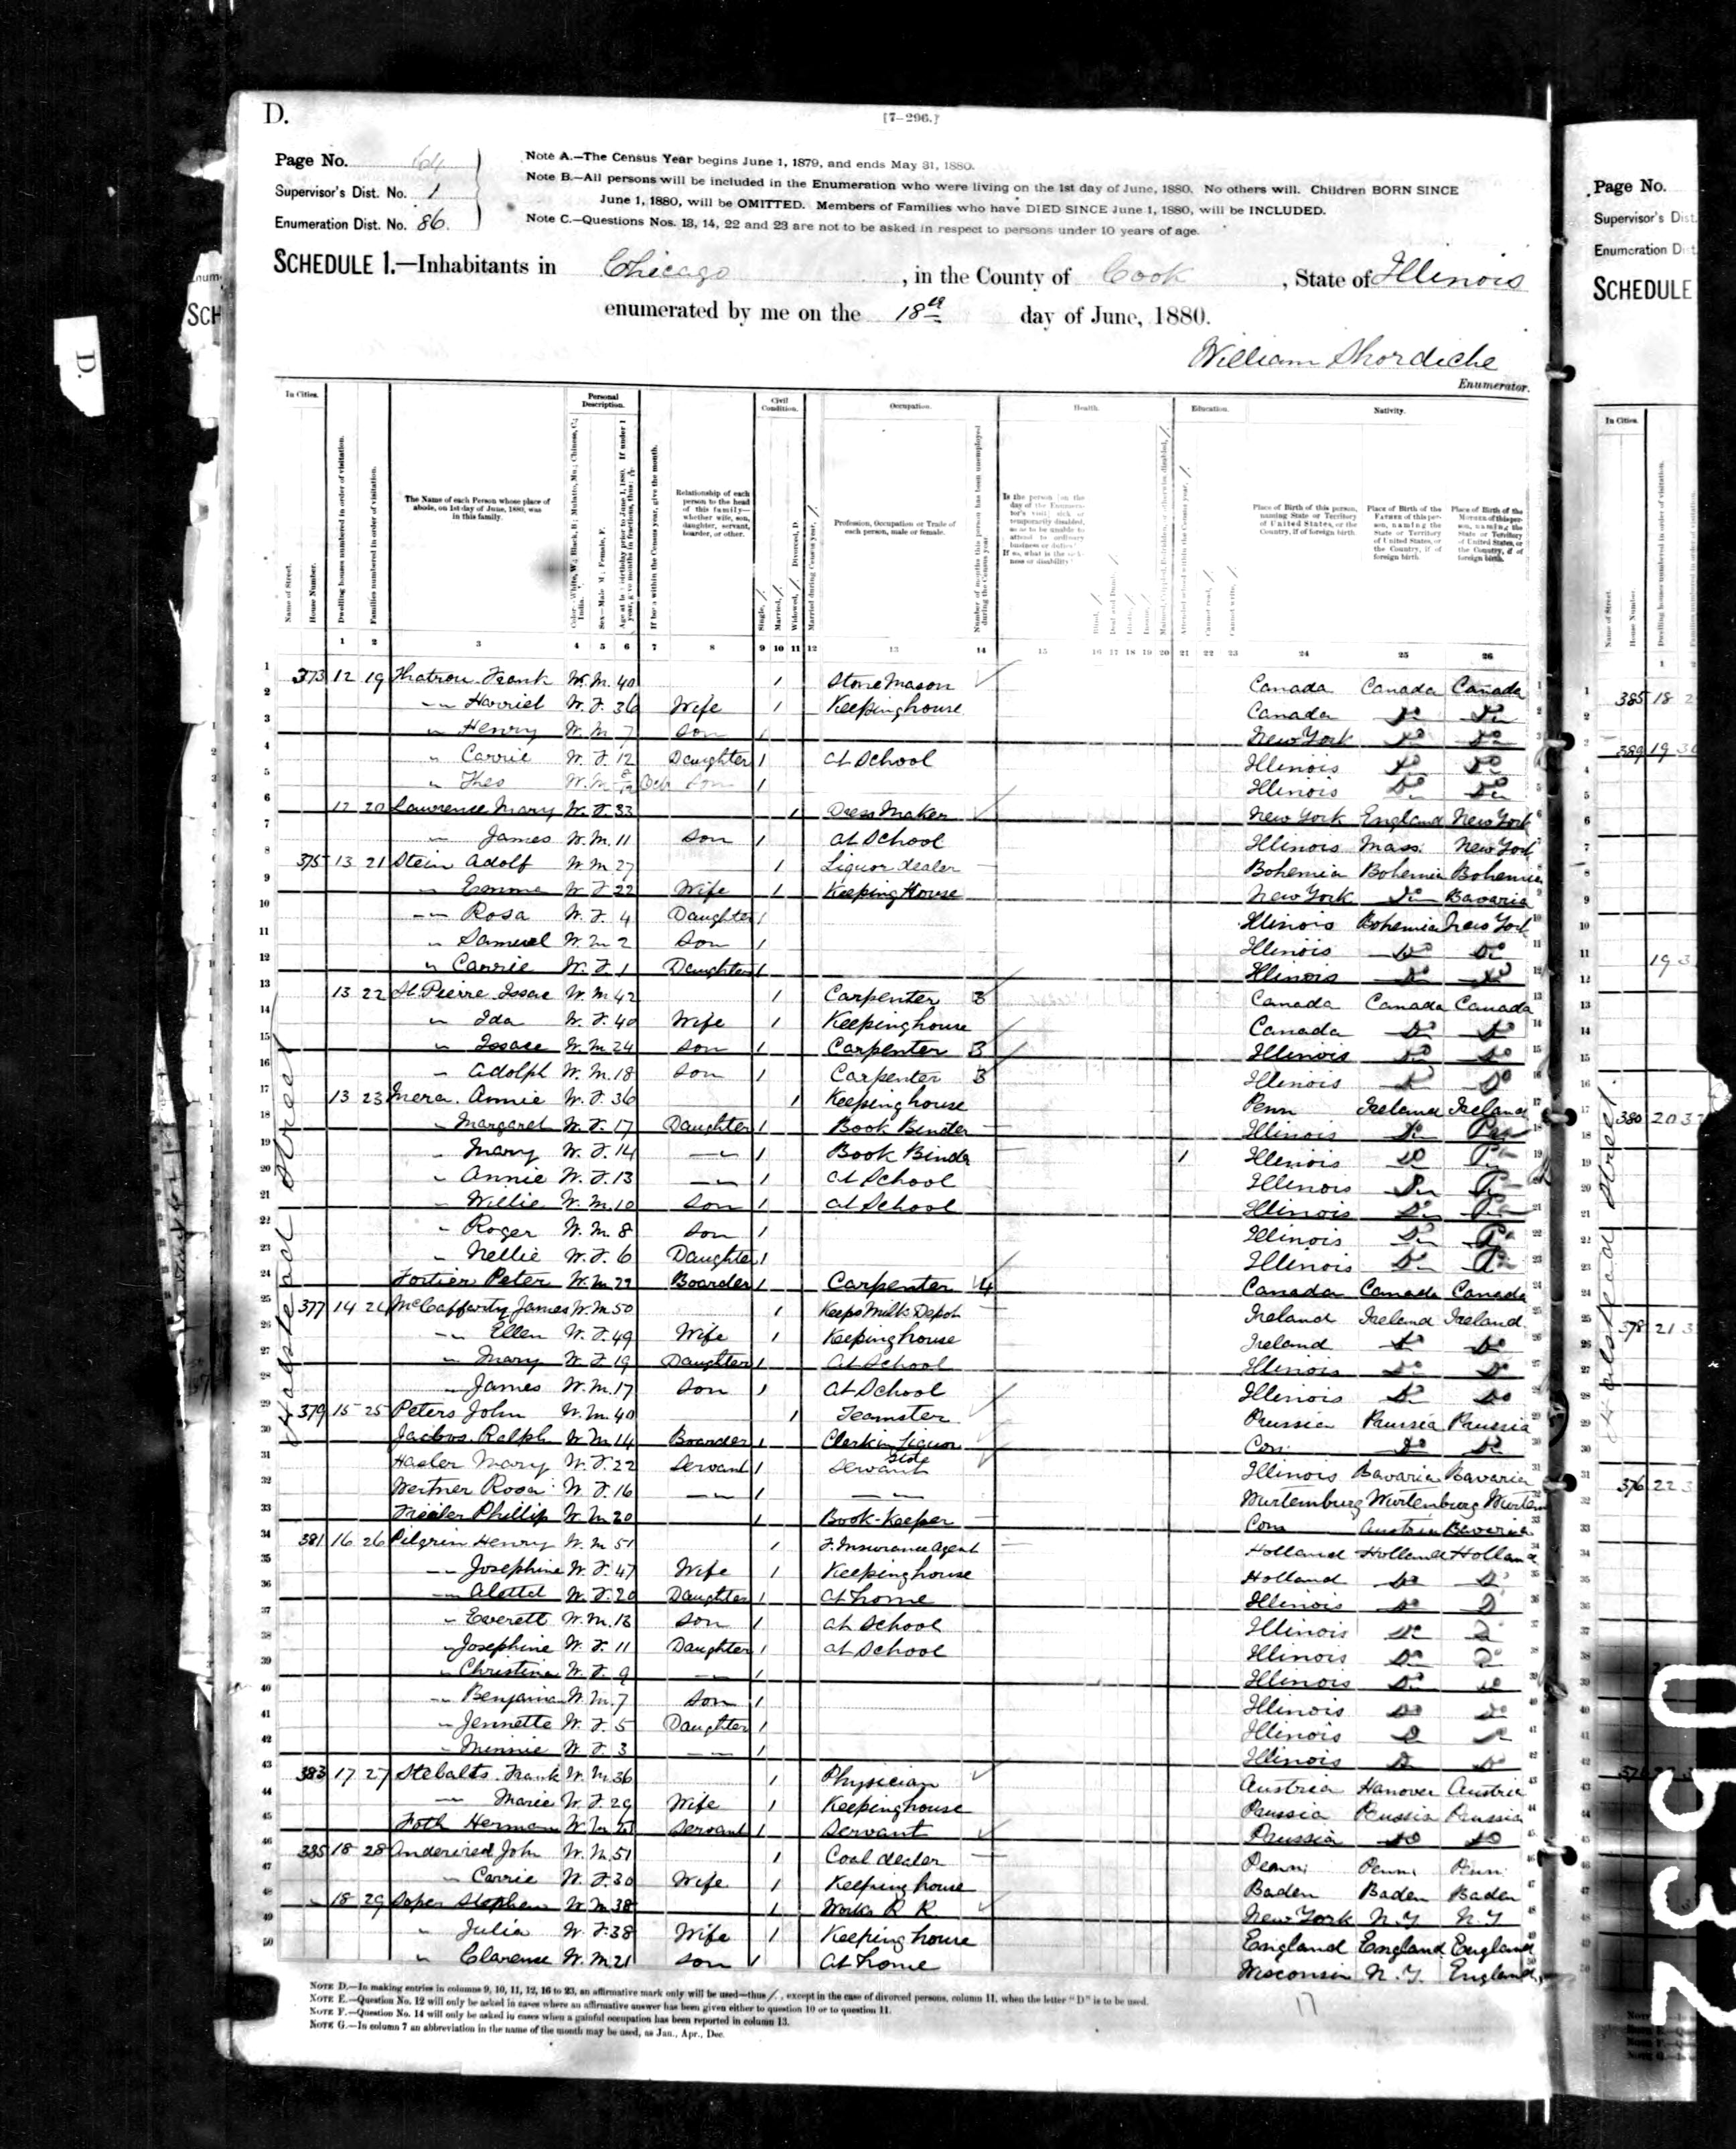 1880 US census Adolf Stein family